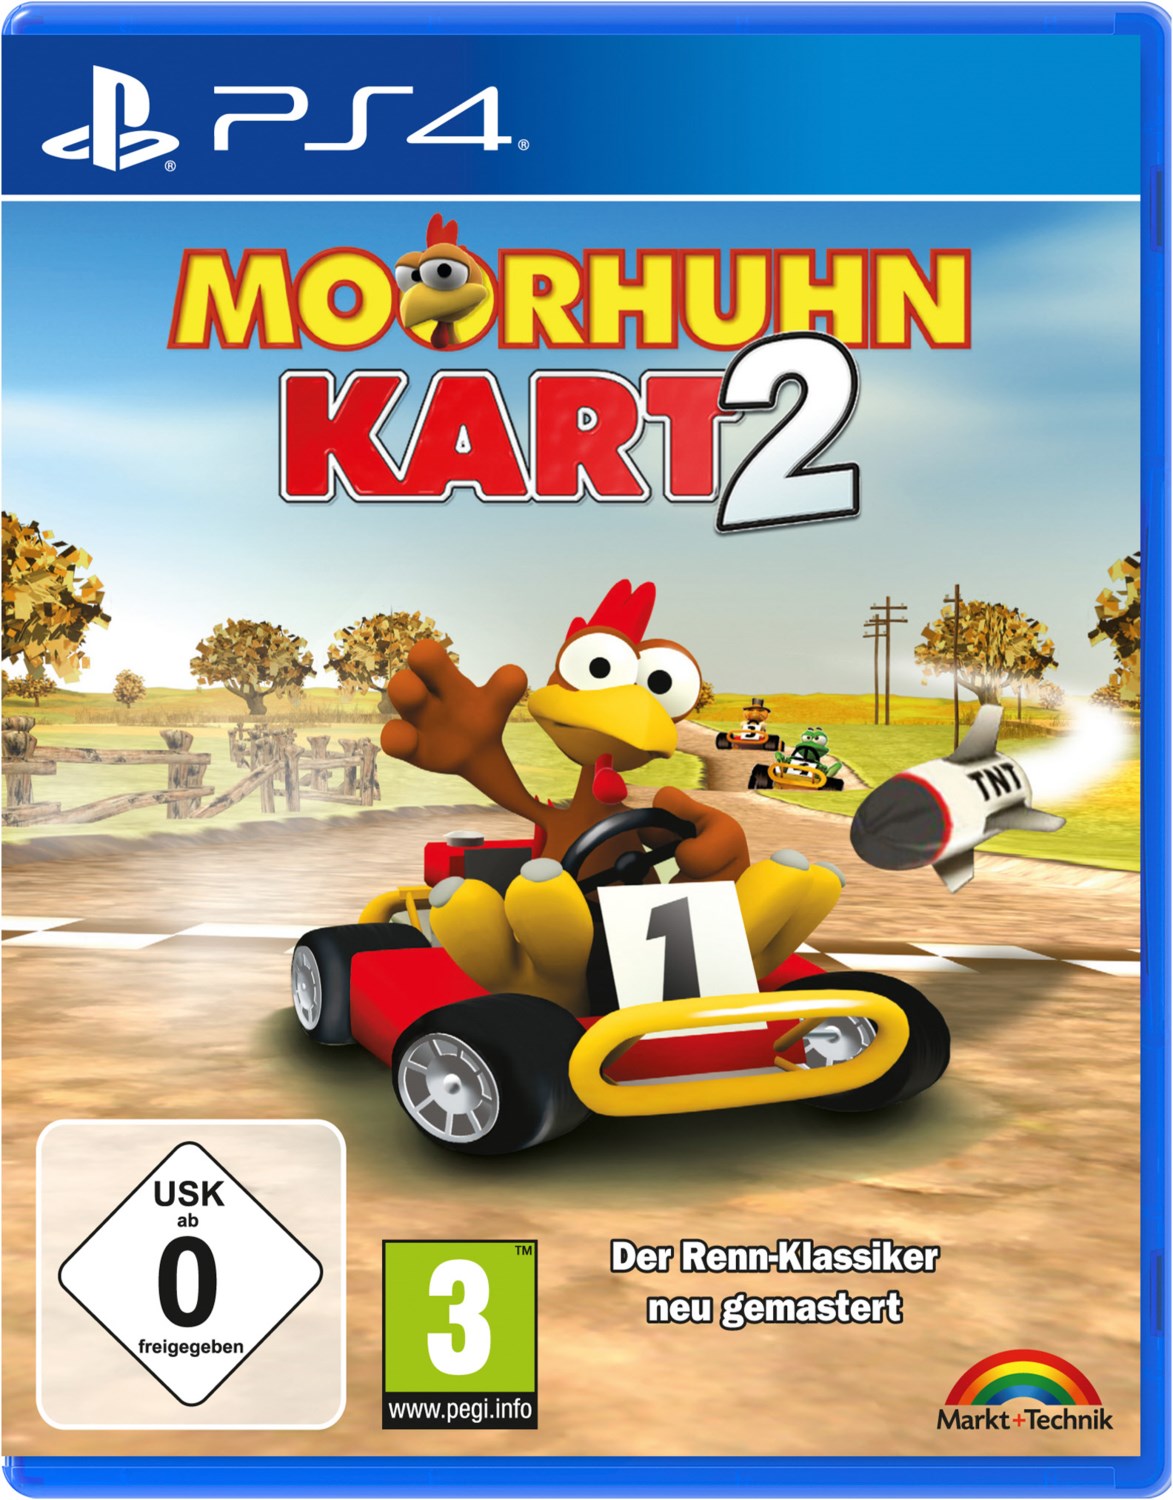 PS4 Moorhuhn Kart 2